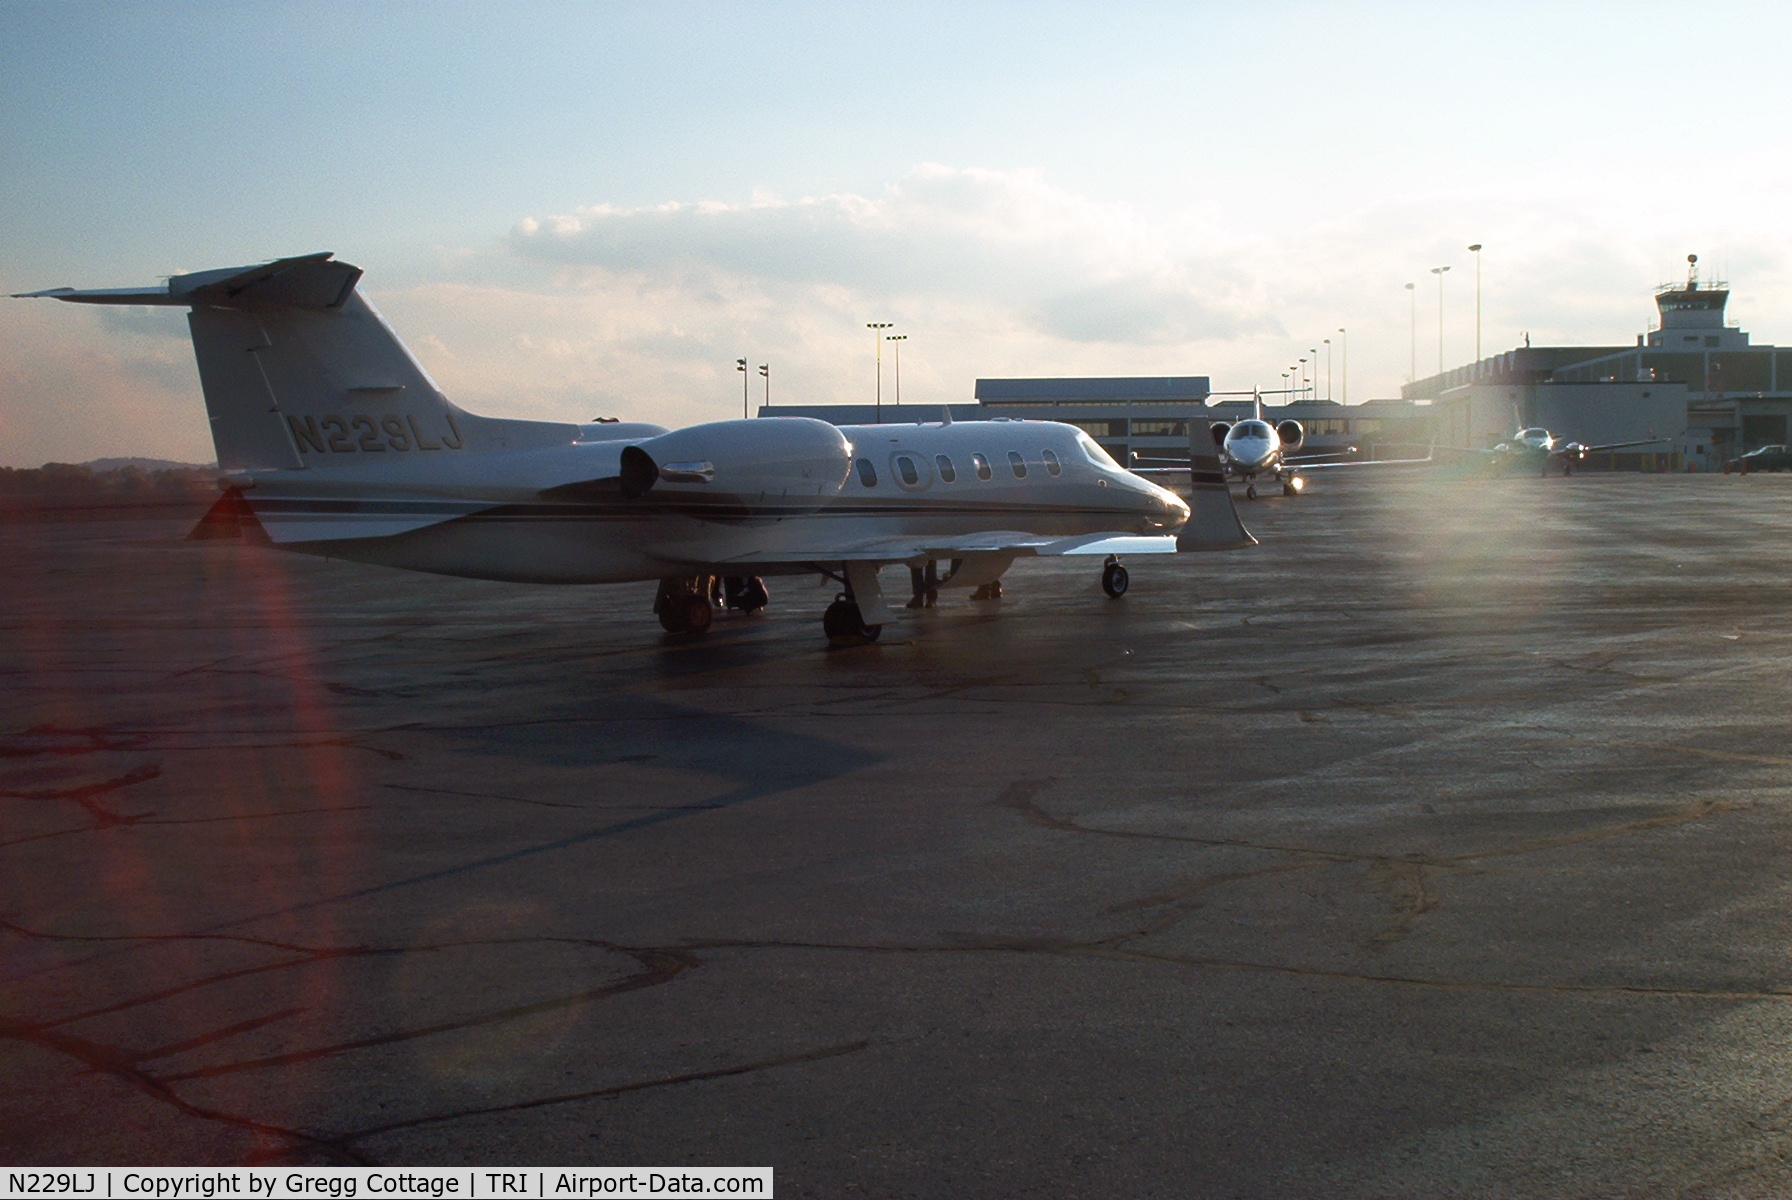 N229LJ, 2001 Learjet Inc 31A C/N 229, Just landed at TRI